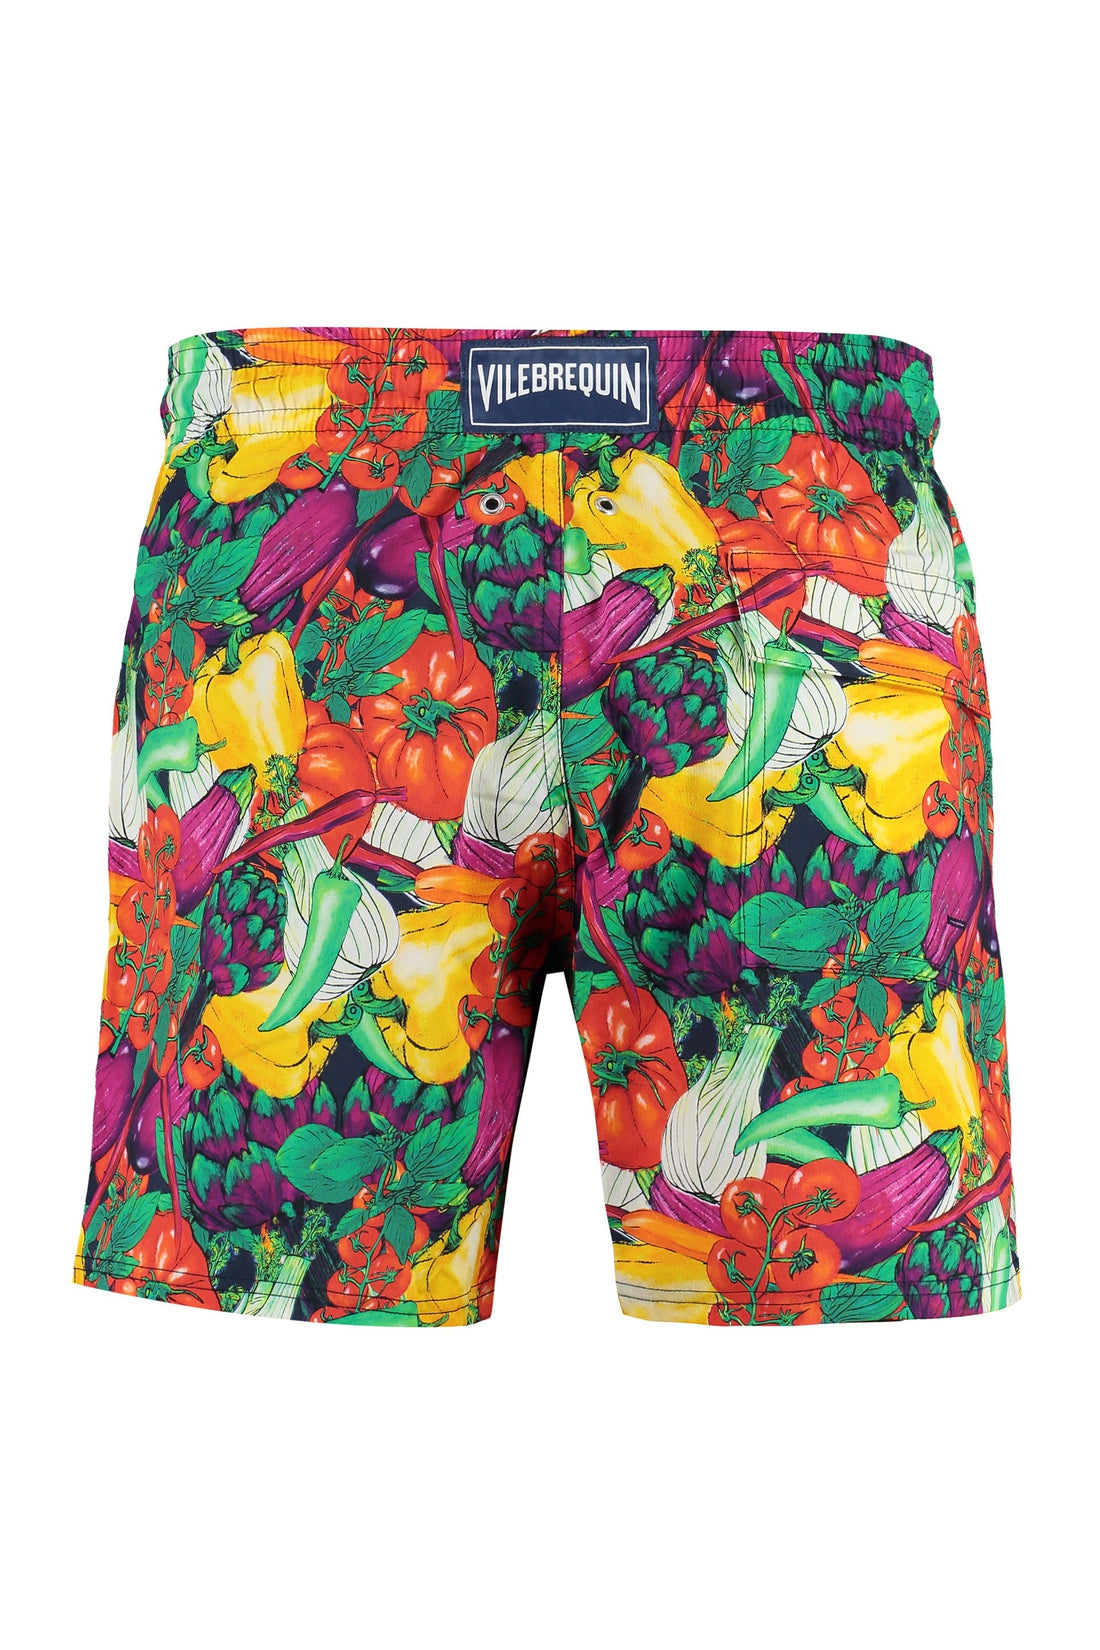 Vilebrequin-OUTLET-SALE-Moorise printed swim shorts-ARCHIVIST